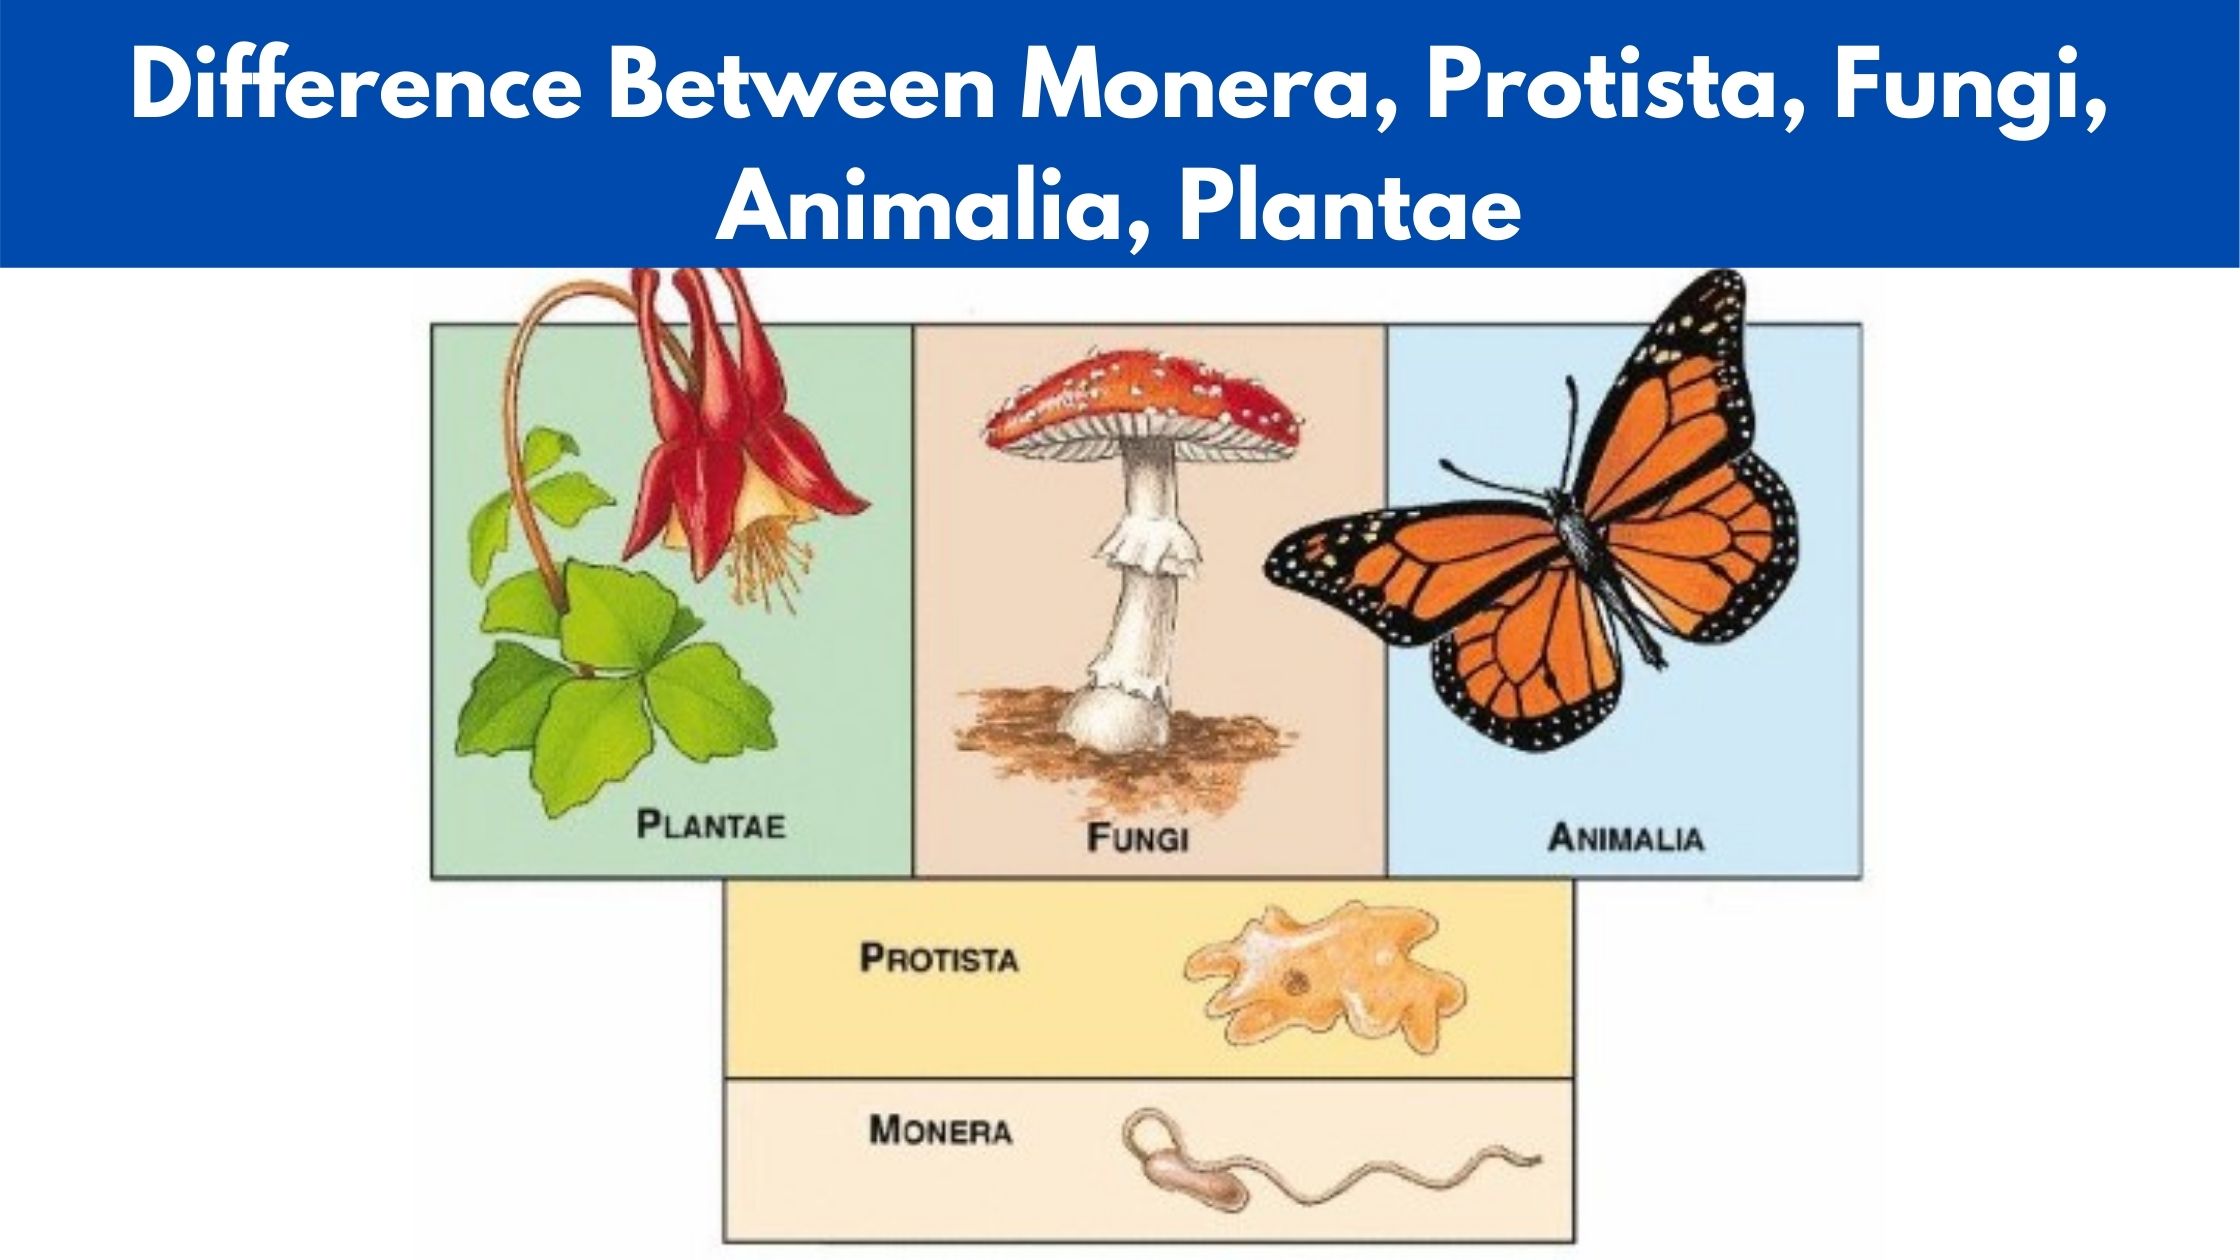 Difference Between Monera, Protista, Fungi, Animalia, Plantae